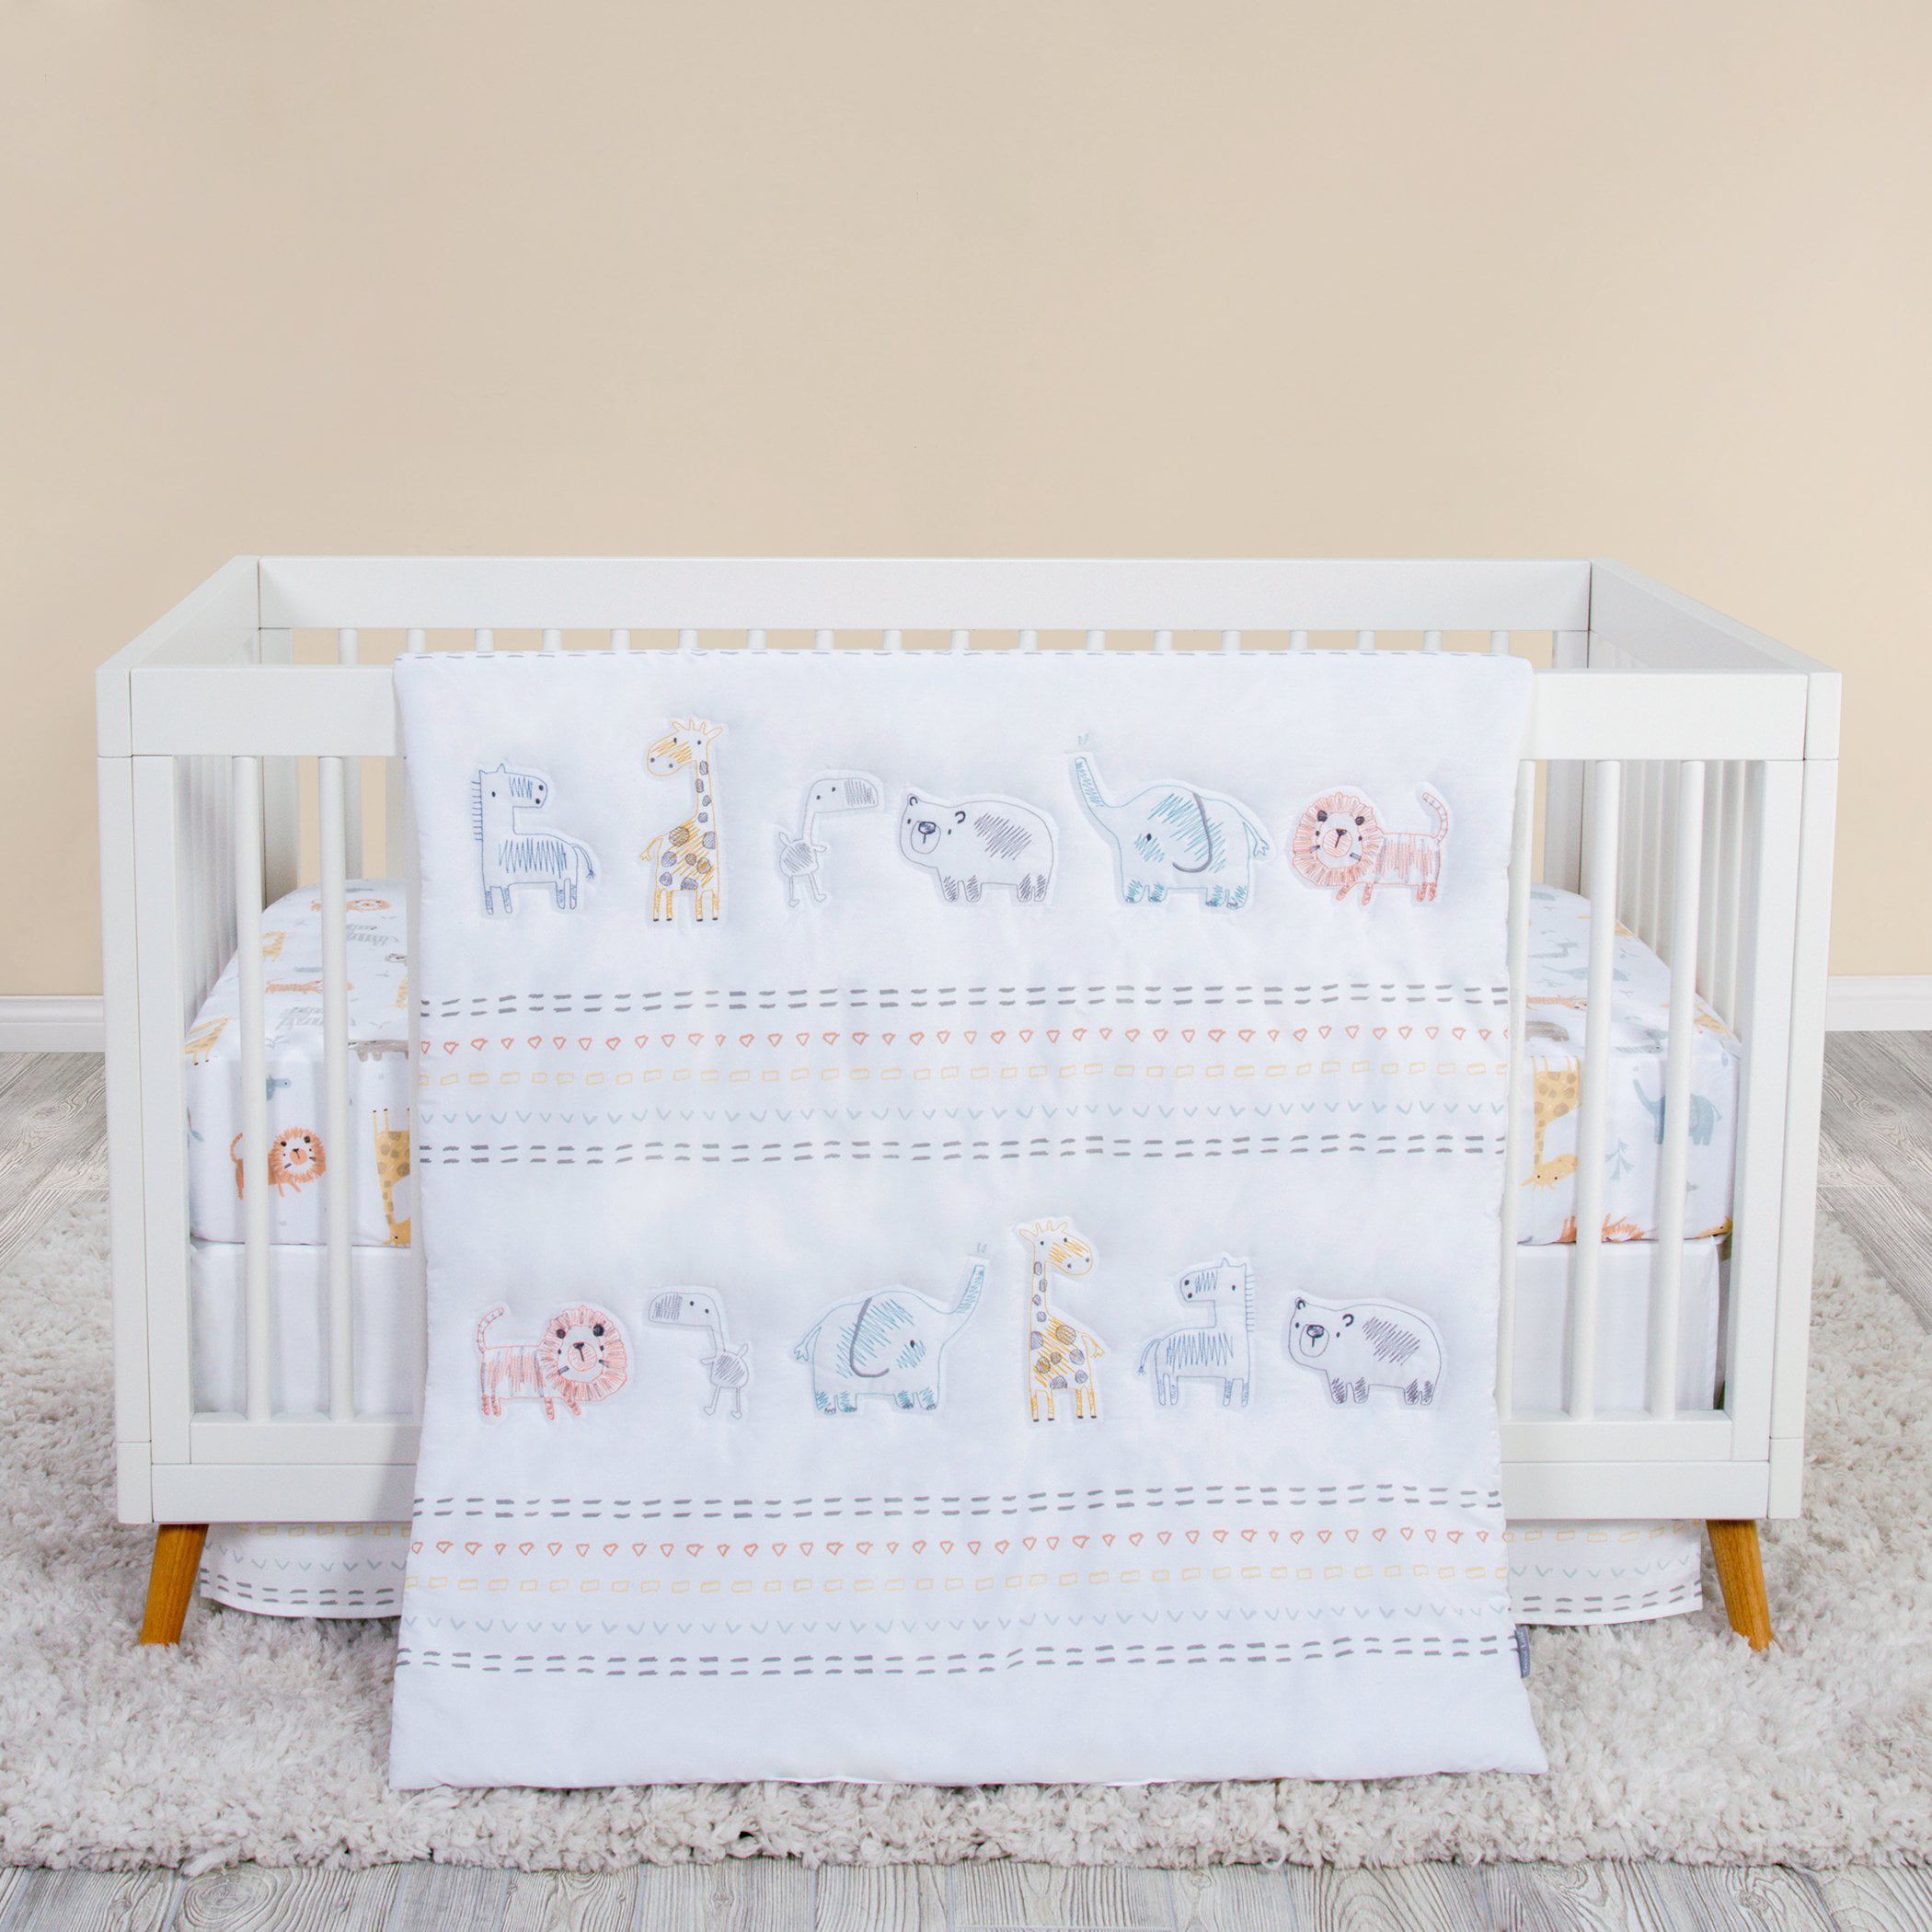 Navy/Light Blue/White, NoJo Dreamer Mosaic Animals 8 Piece Nursery Crib Bedding Set 